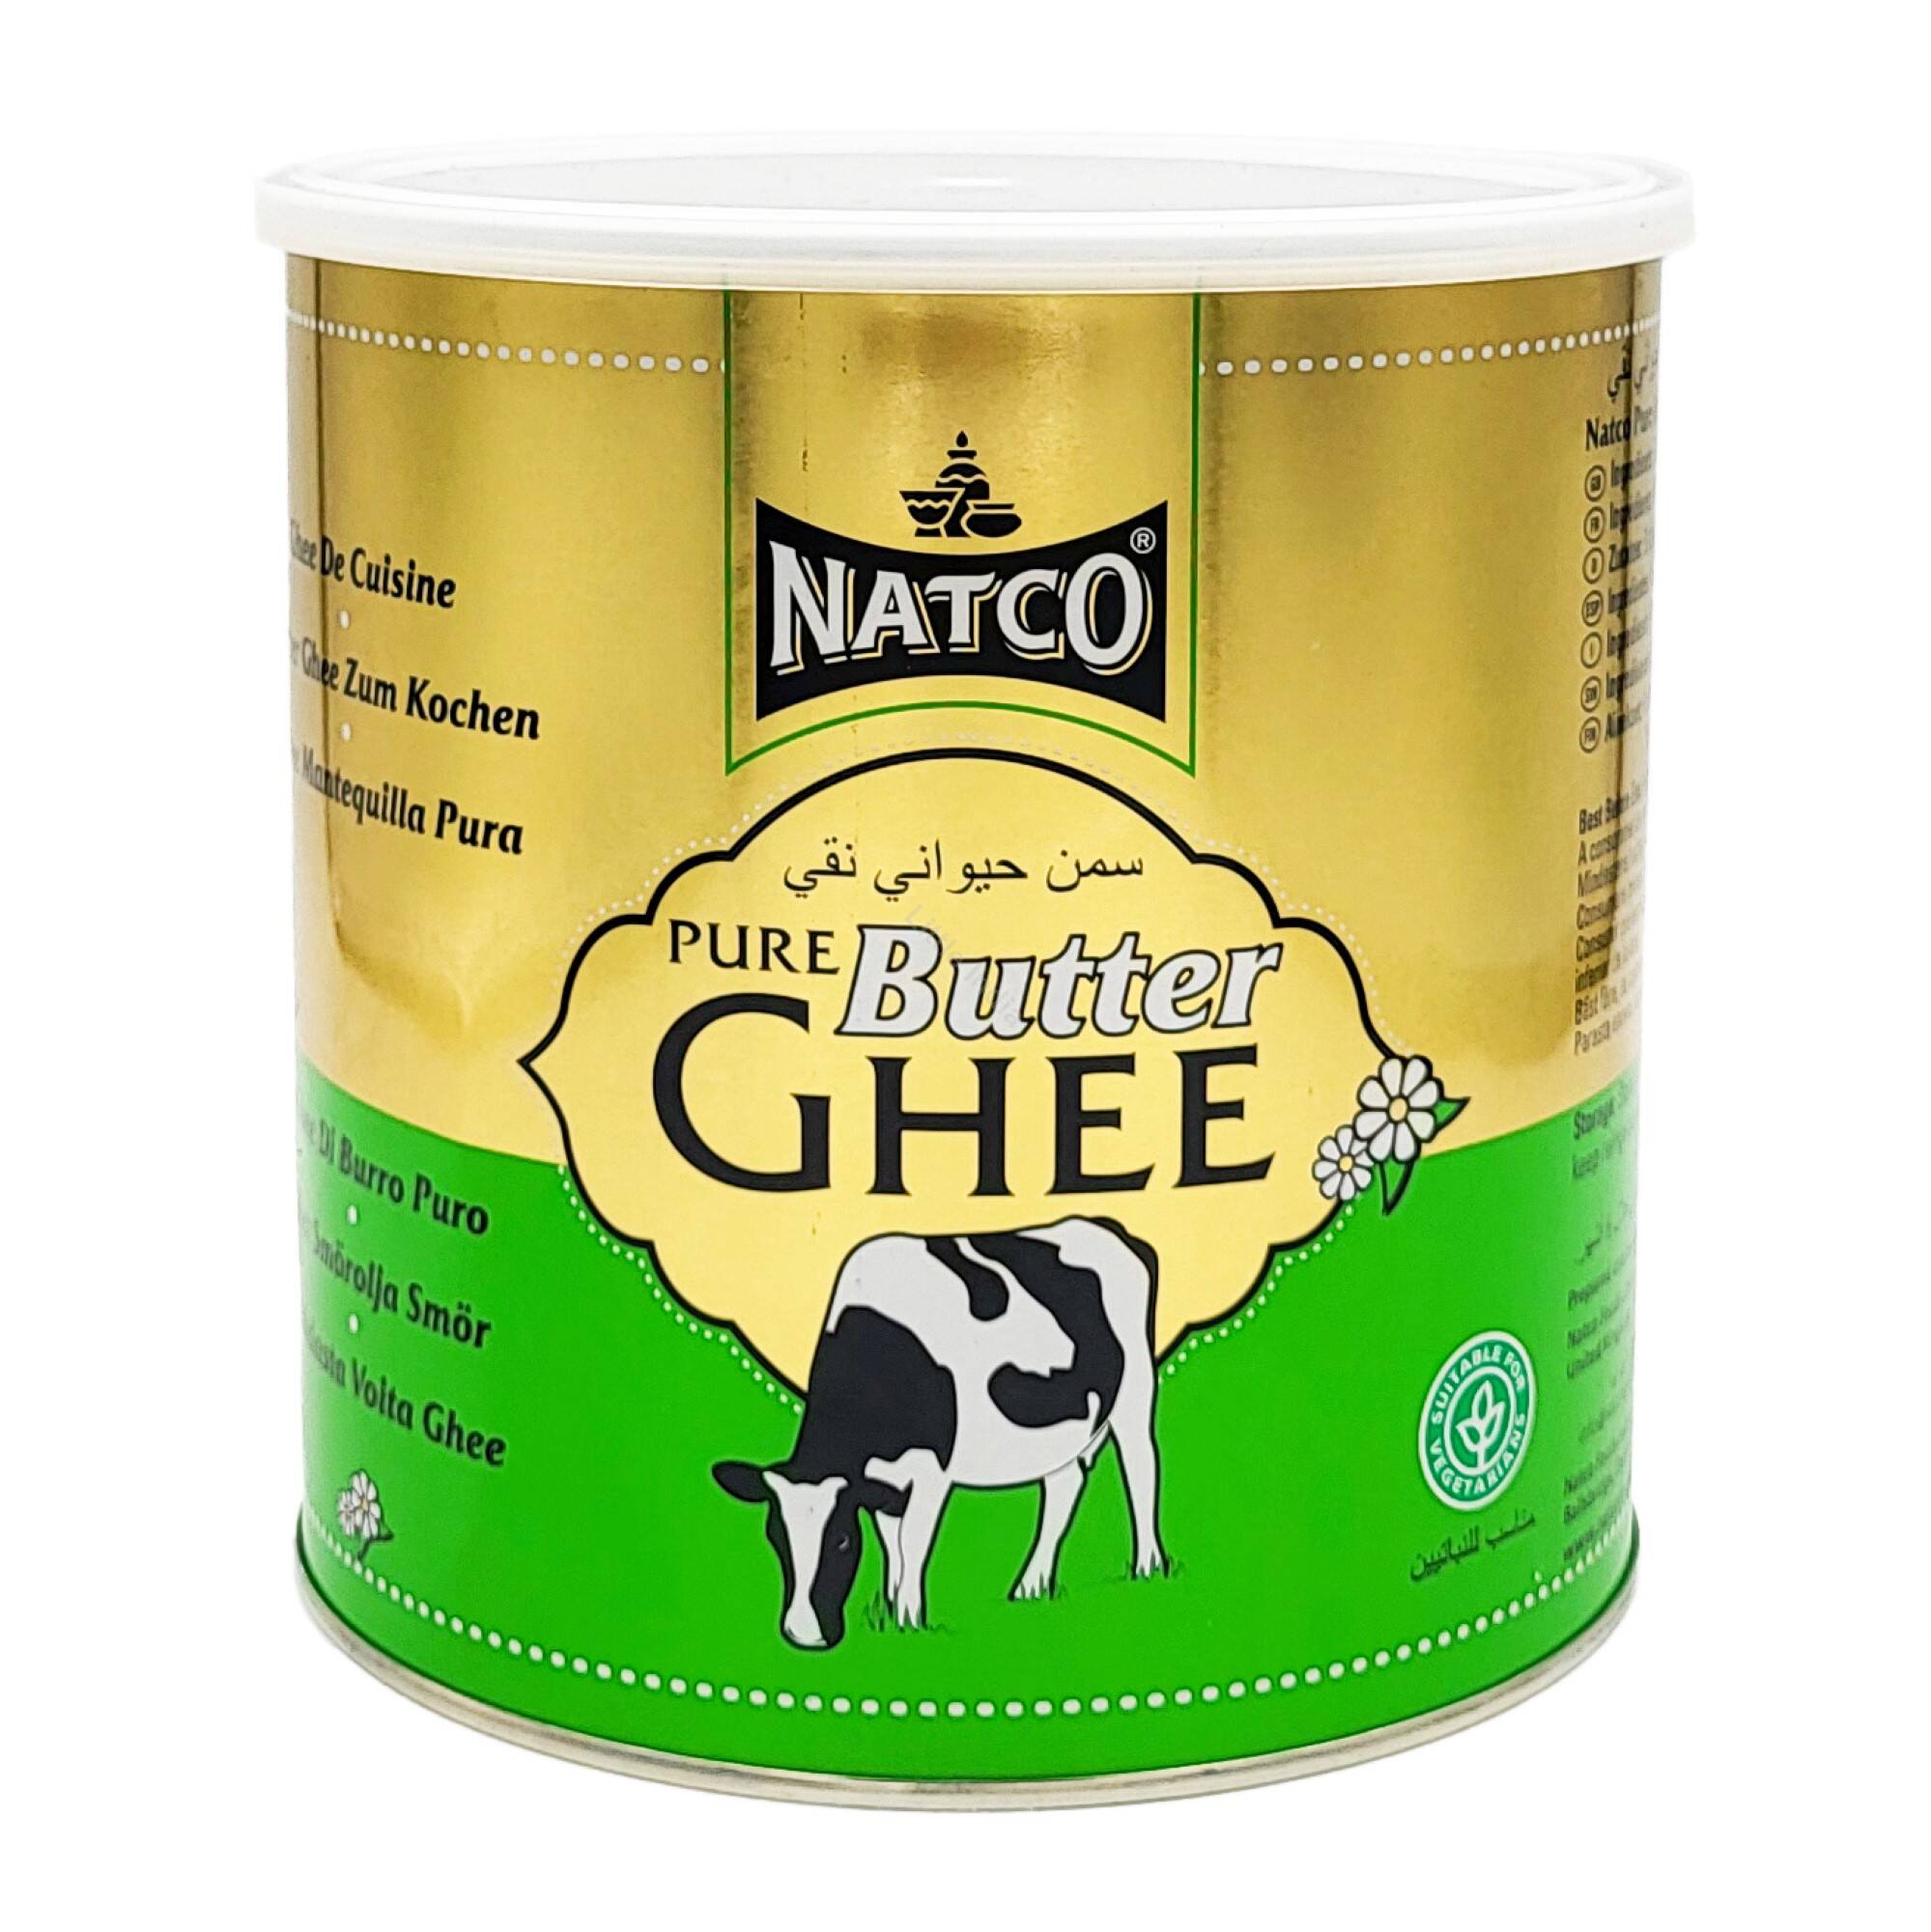 Natco Pure Butter Ghee 2kg *MEGA OFFER*